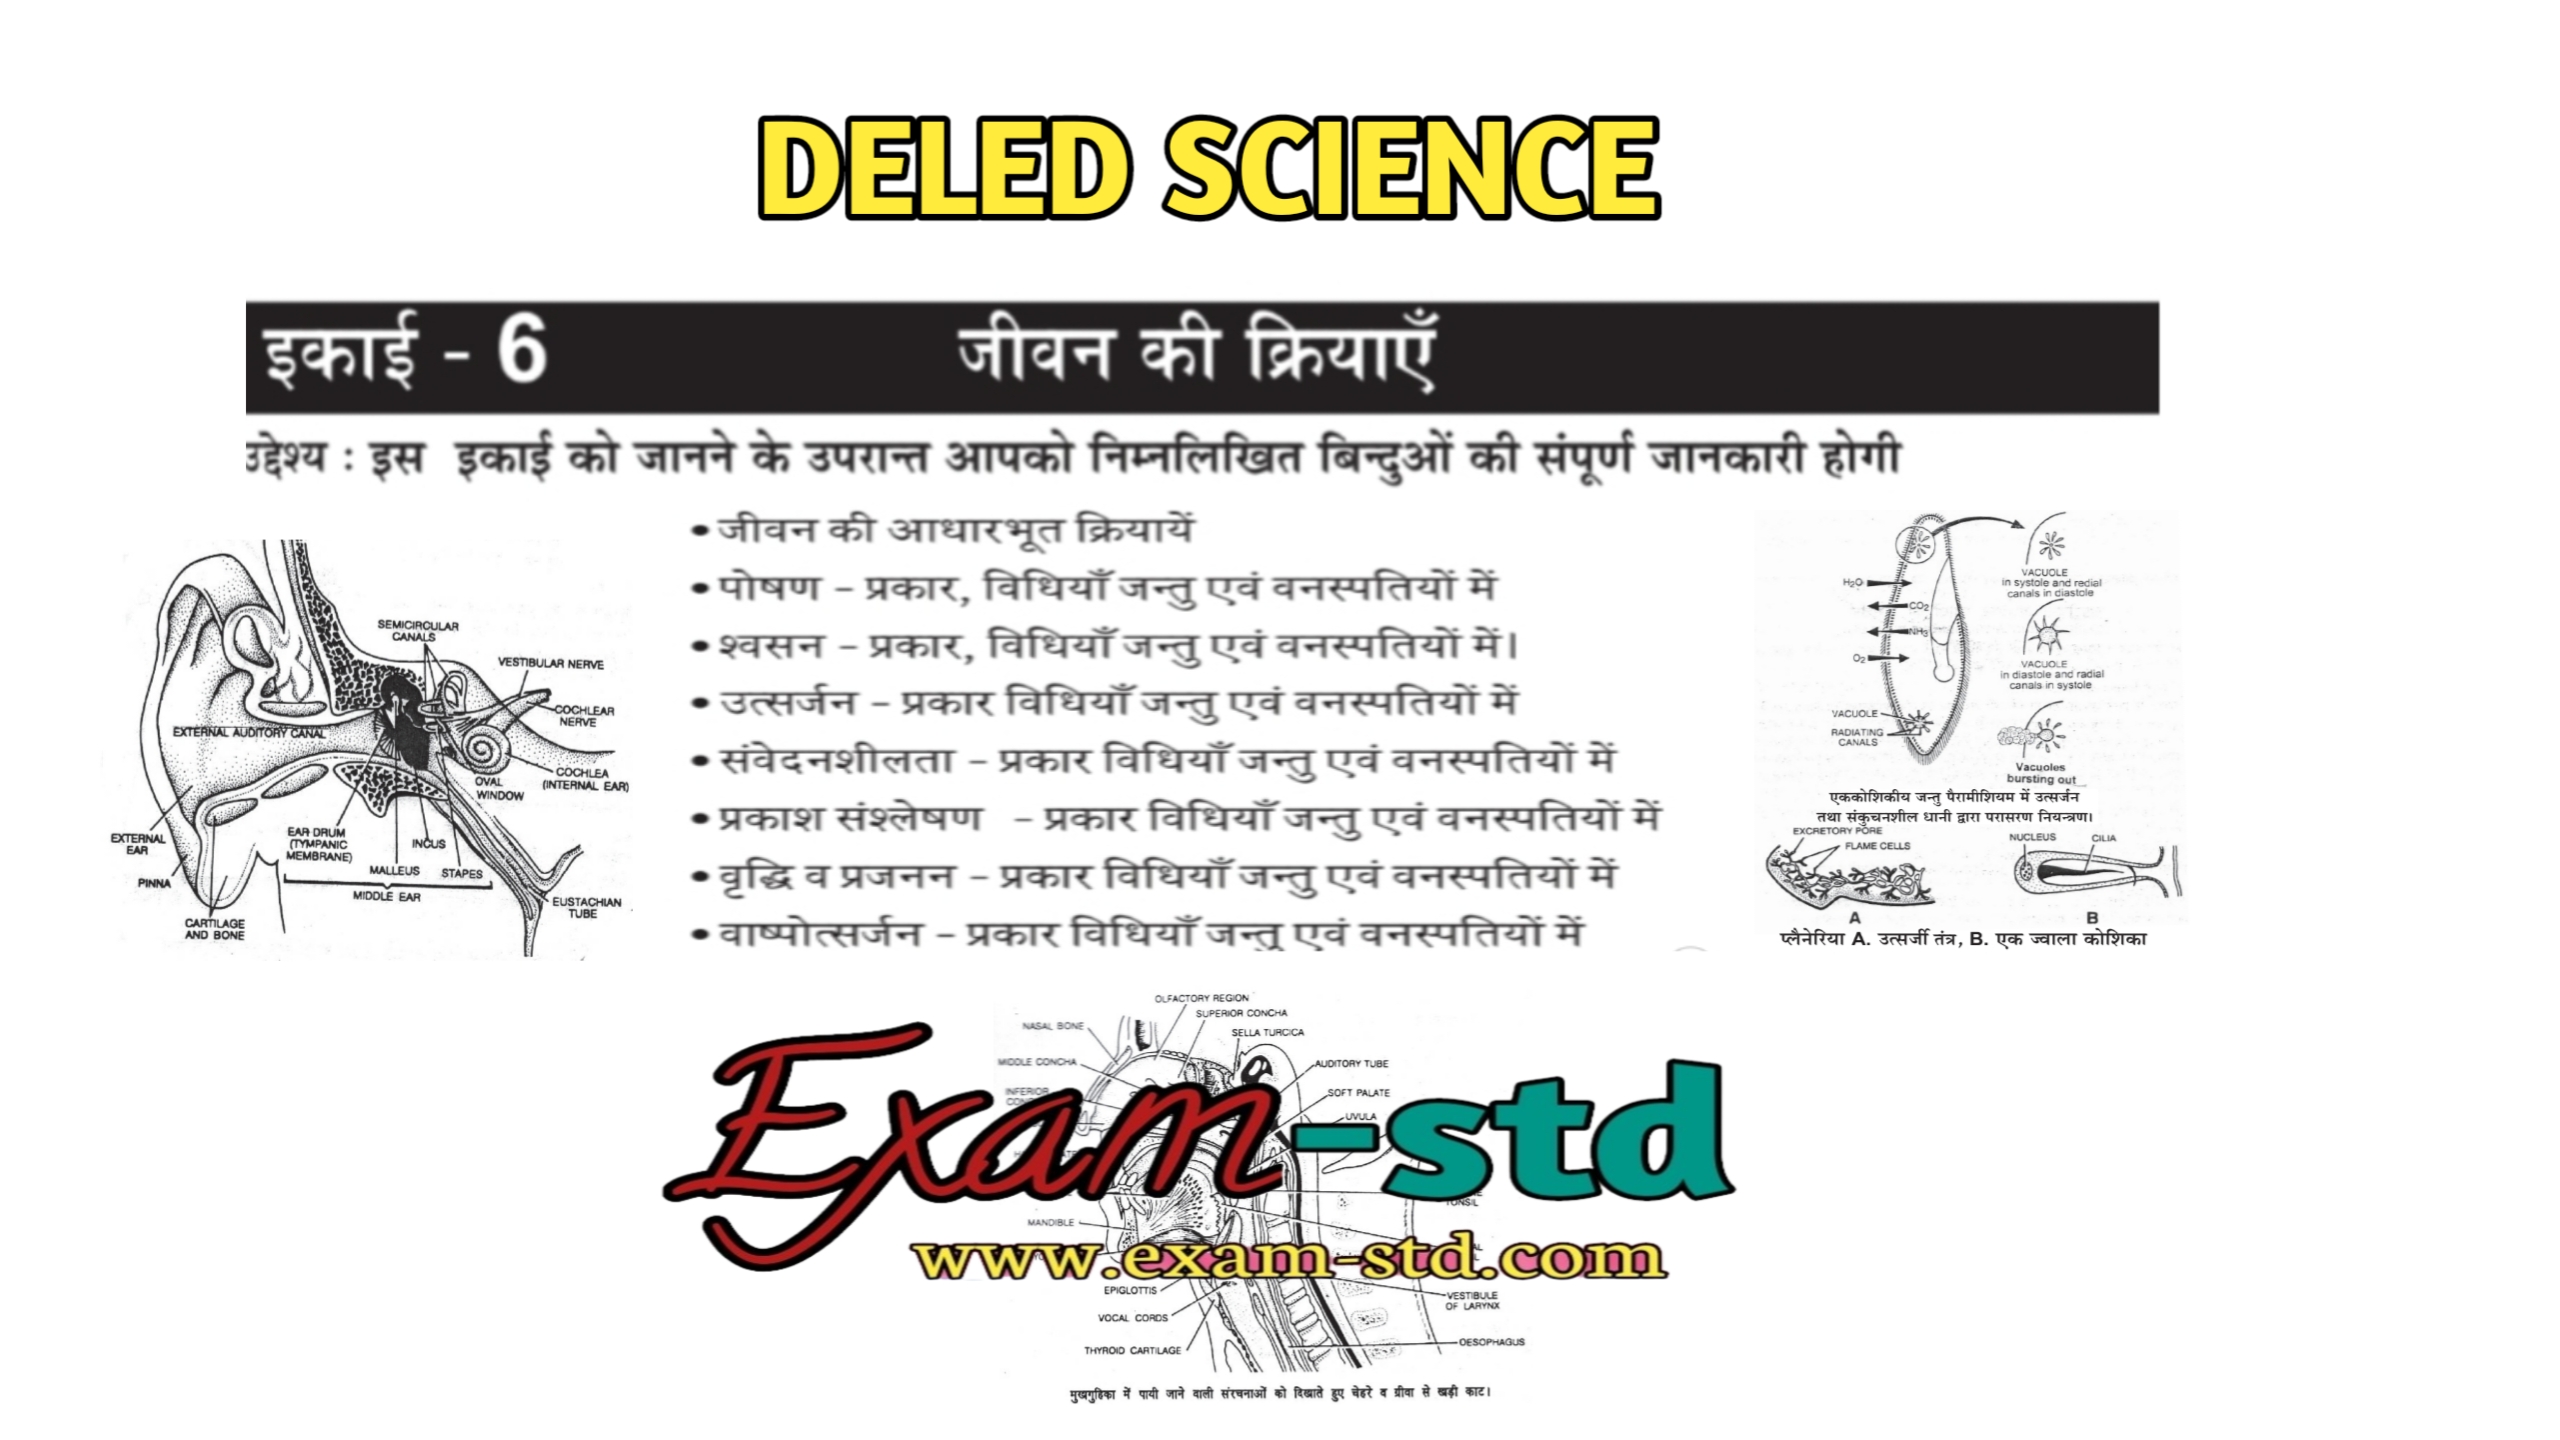 Deled science notes in hindi, jivan ki kriyaye, Roshan, shwasan, utsarjan, sanvedanshilta, Prakash sanshleshan, wradhi awam prajna, wadhpotsarjsn